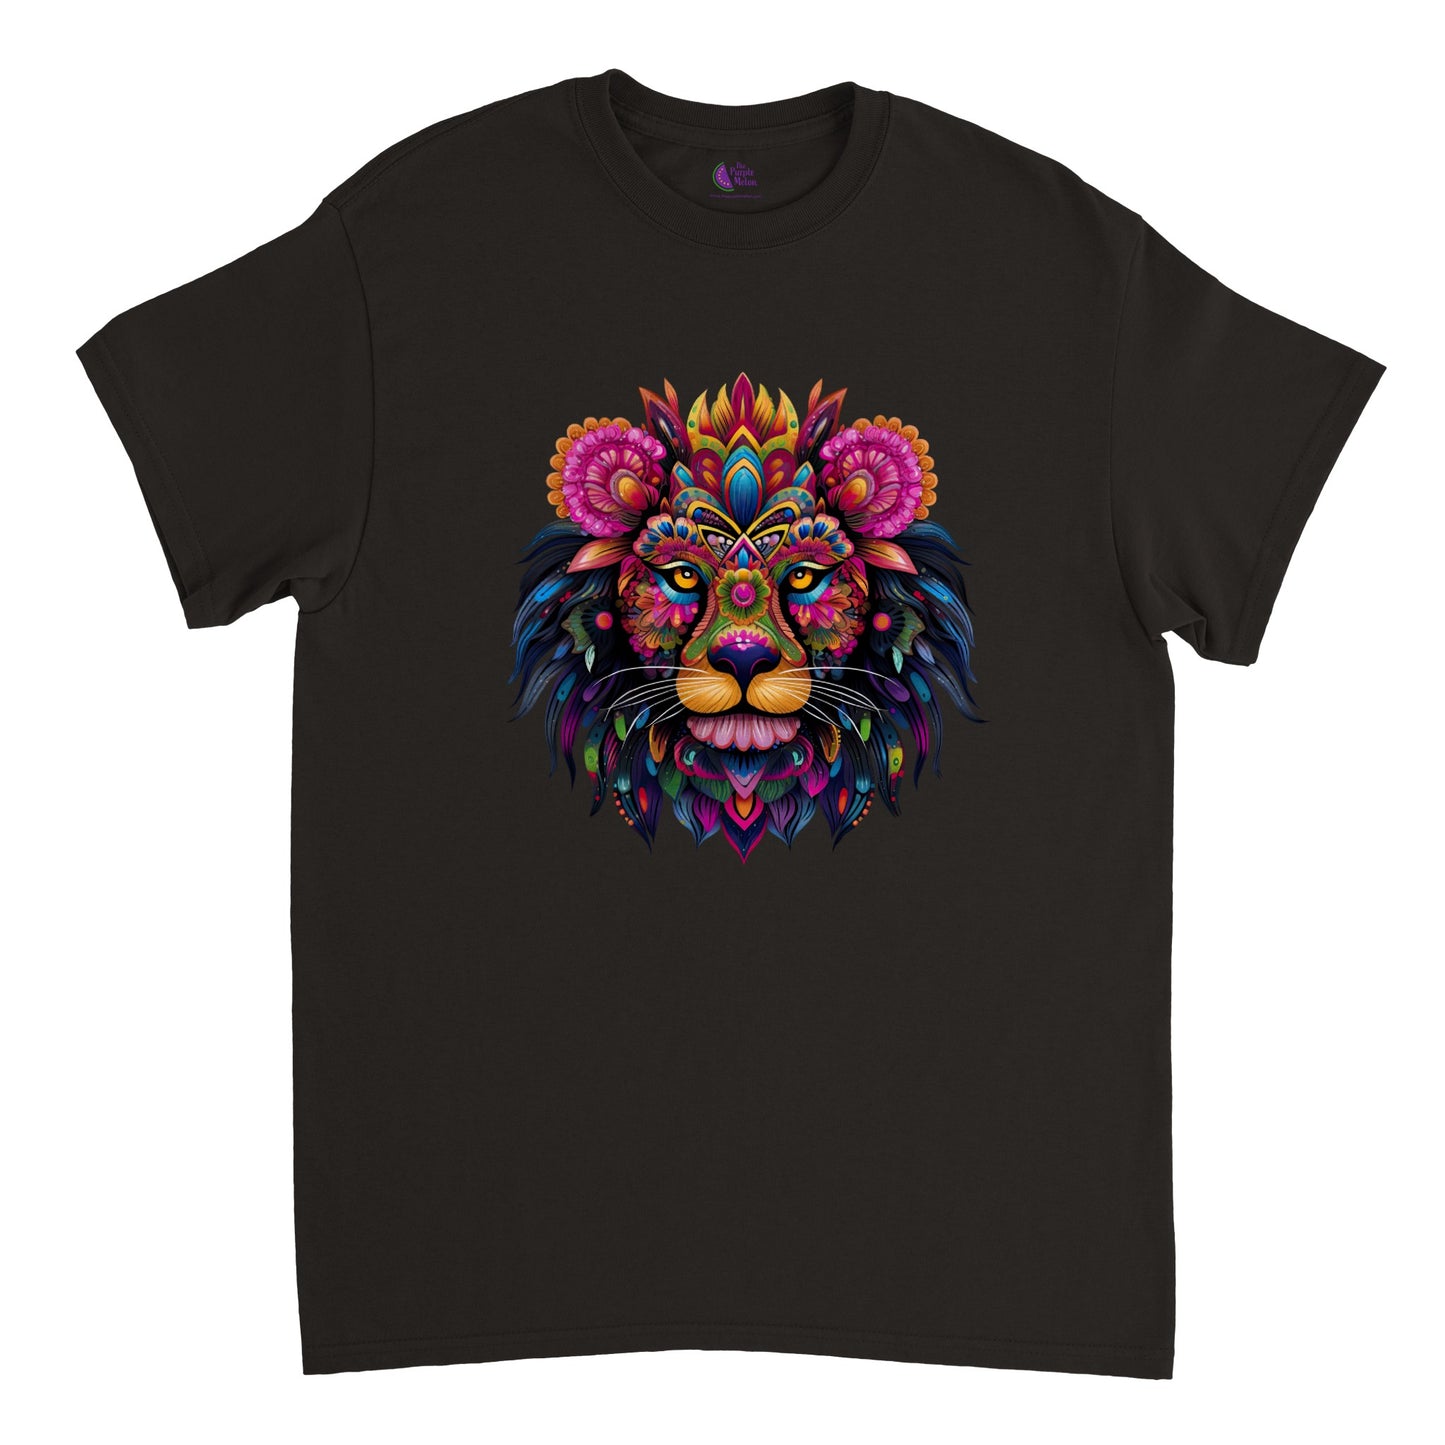 Black t-shirt with a colorful floral lion print